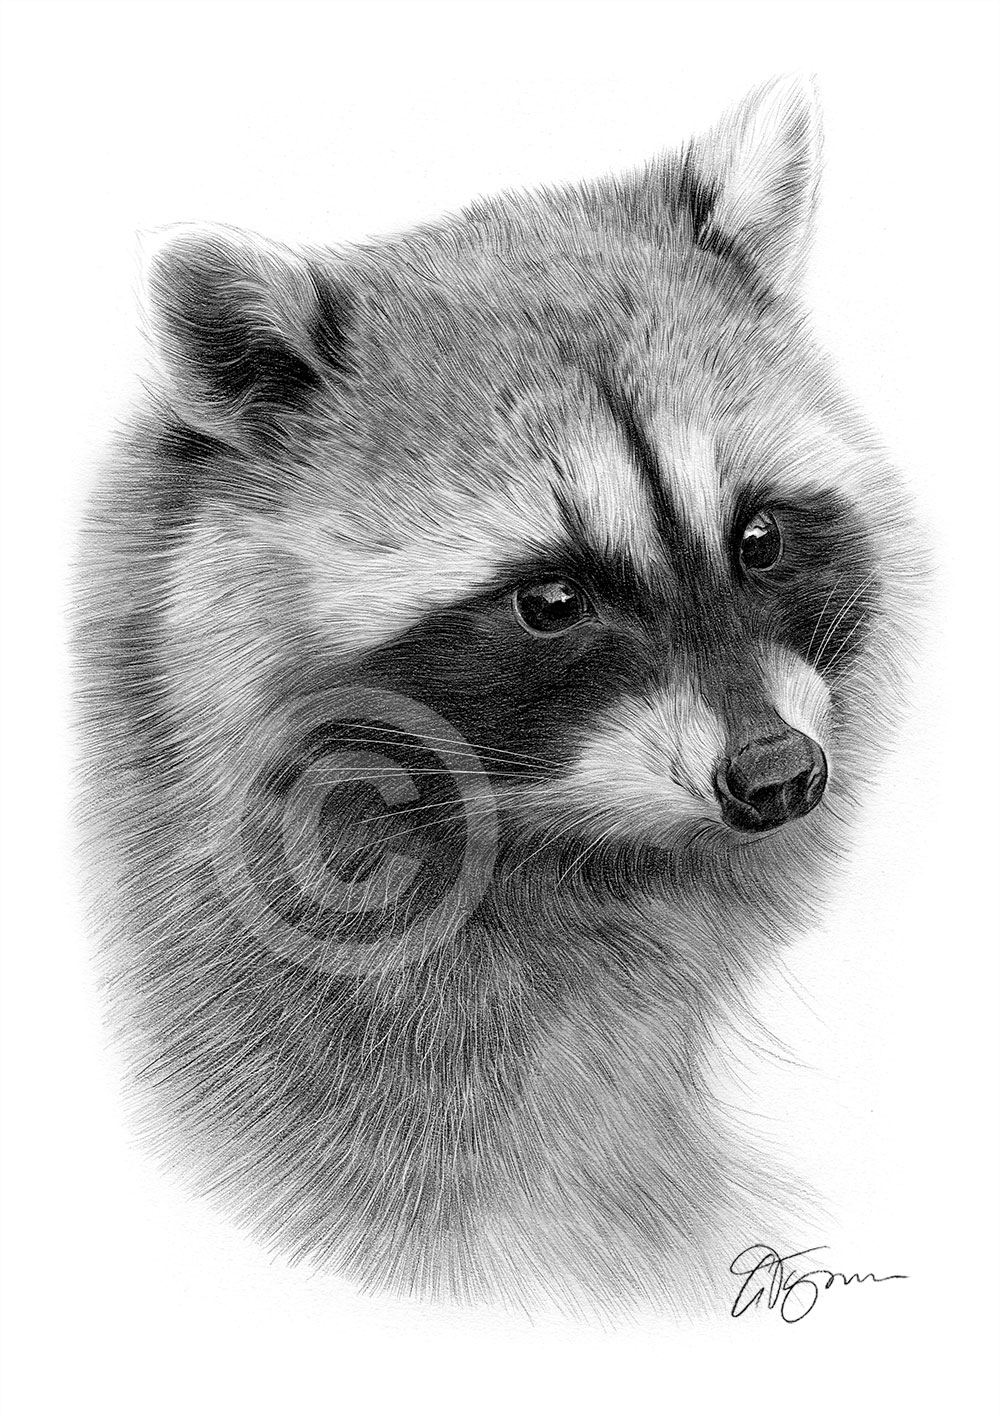 Pencil drawing of a raccoon by UK artist Gary Tymon